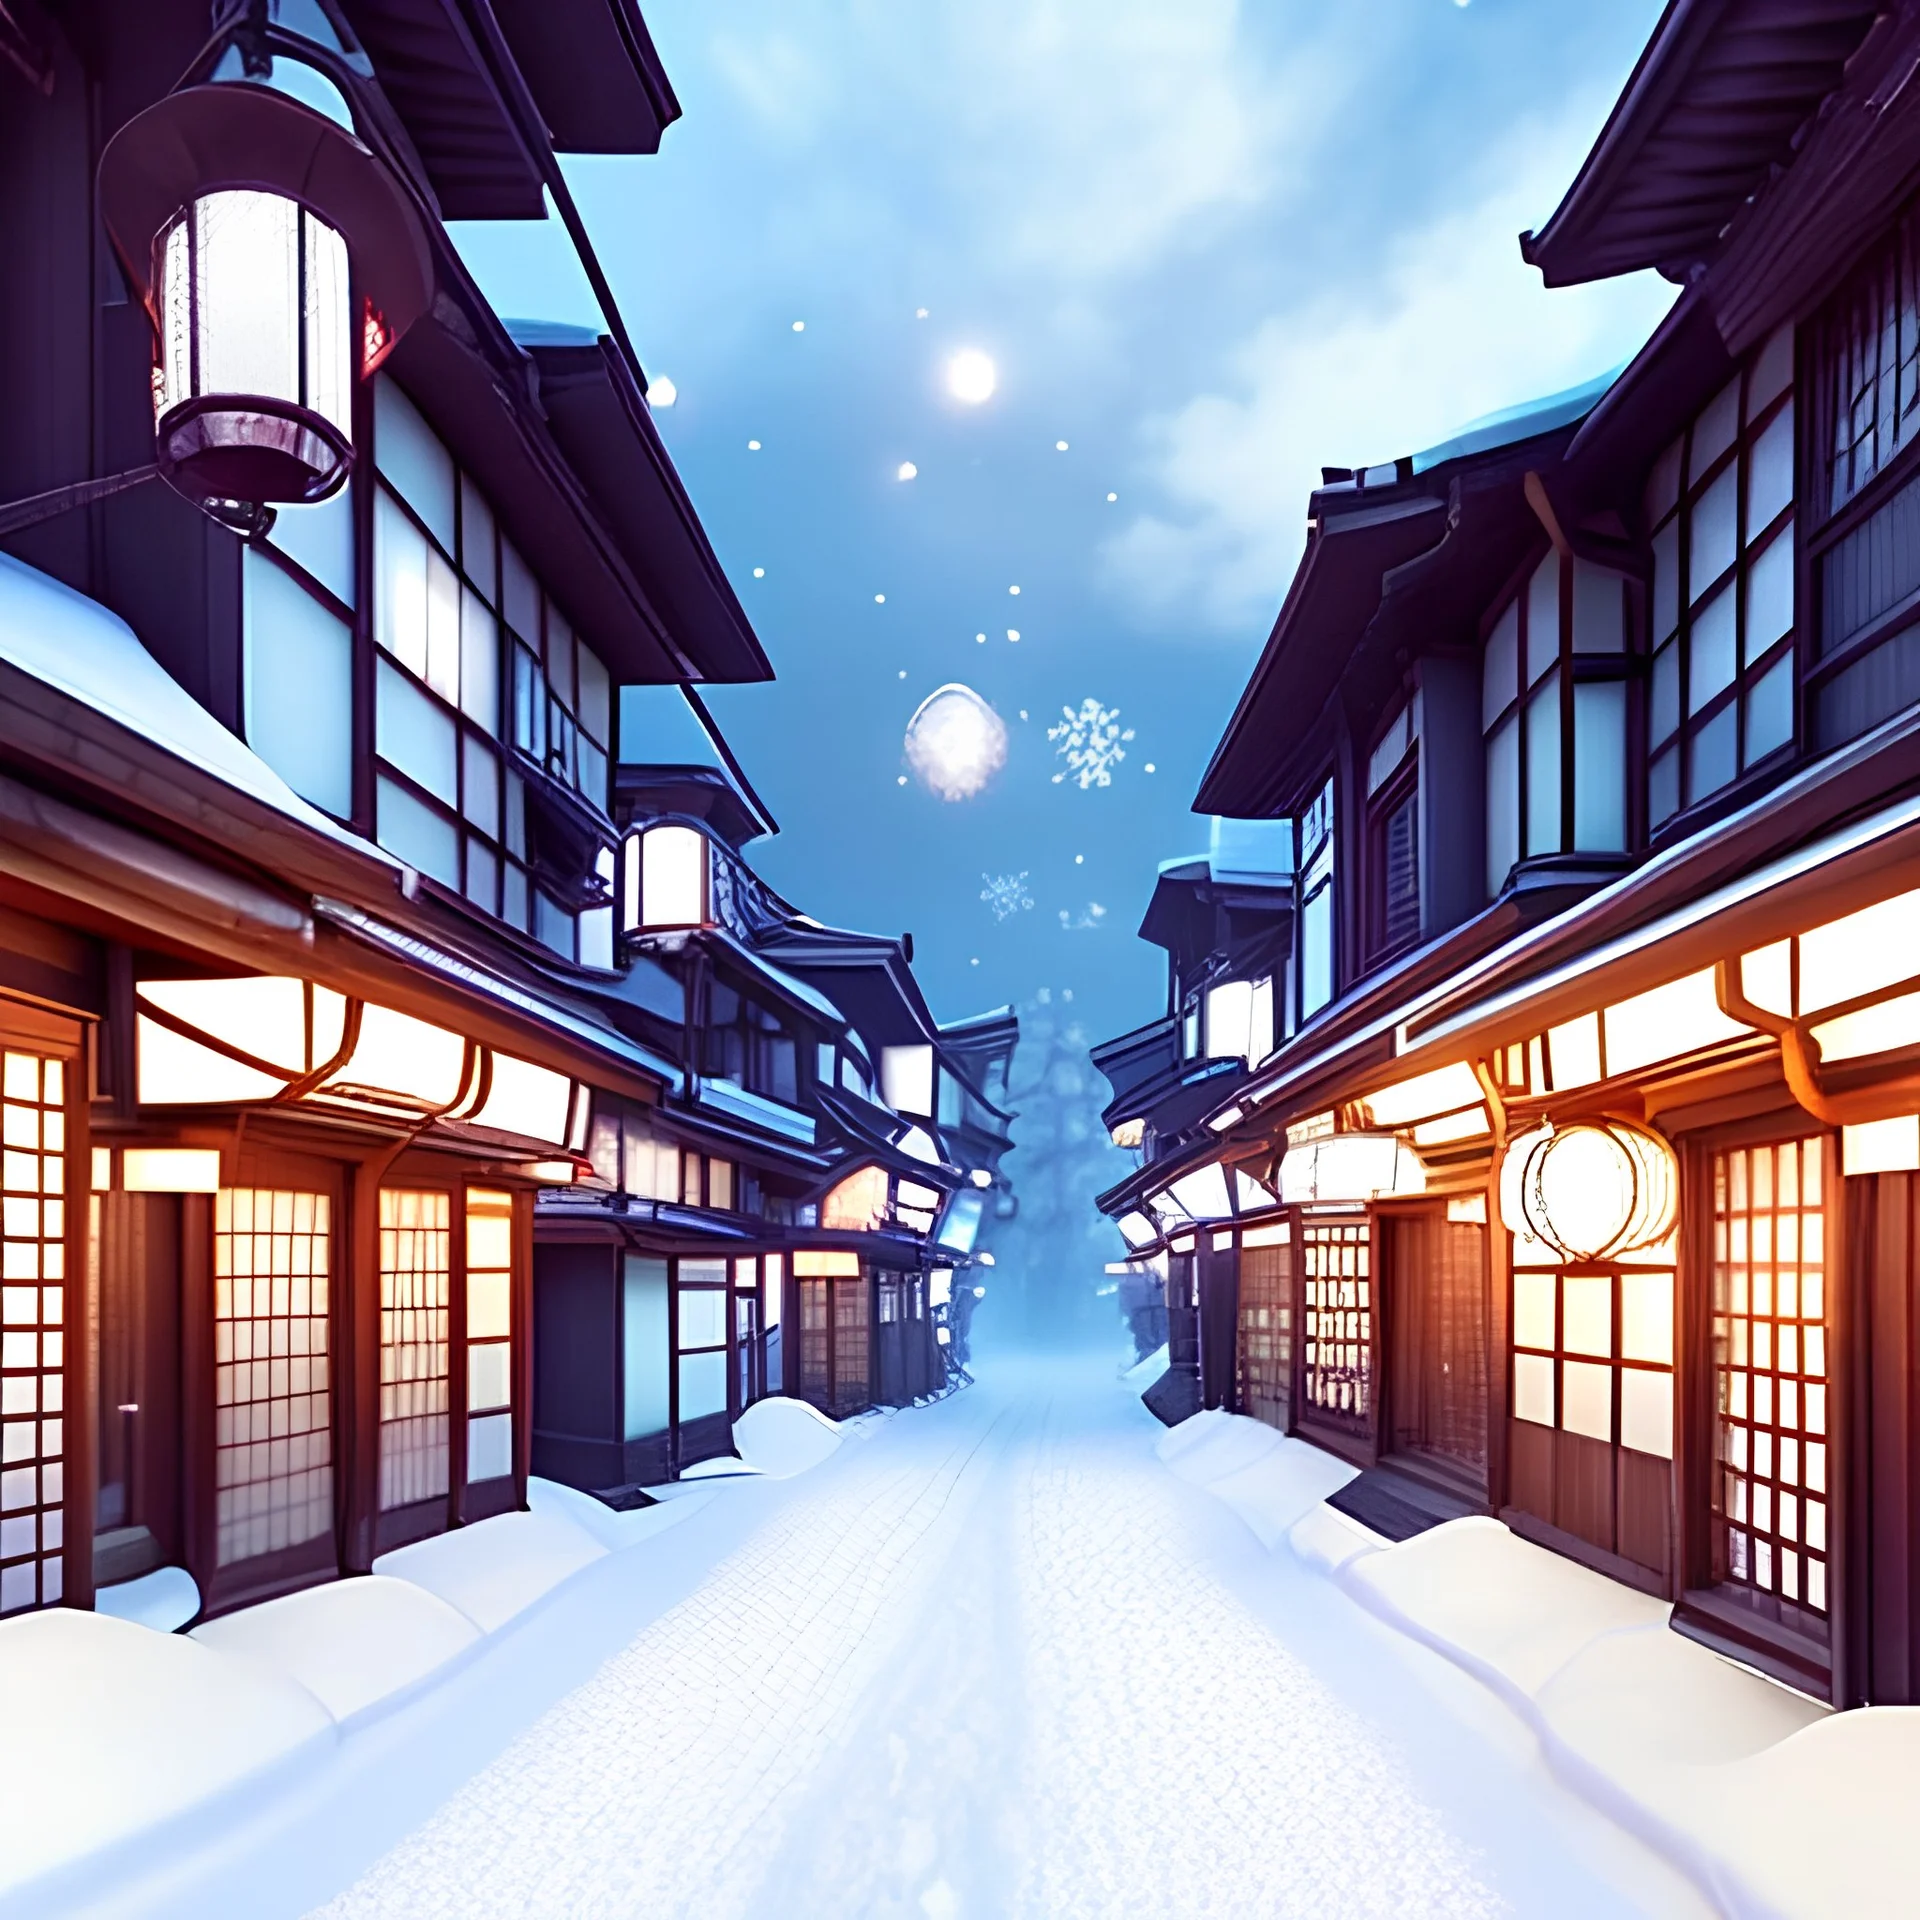 street with snow falling | Deep Dream Generator